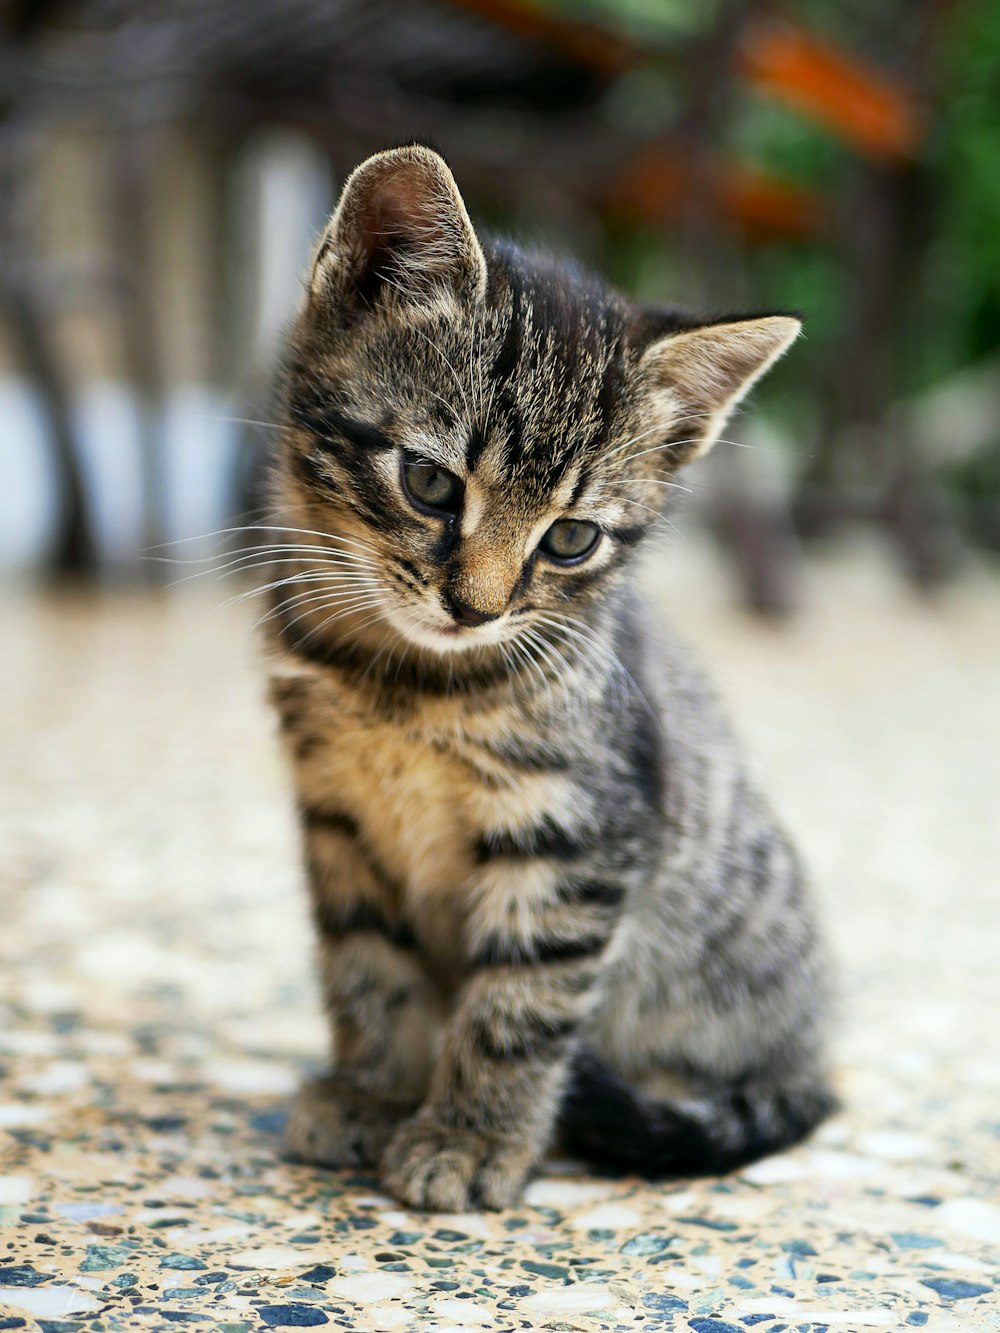 100-kitten-images-download-free-images-on-unsplash